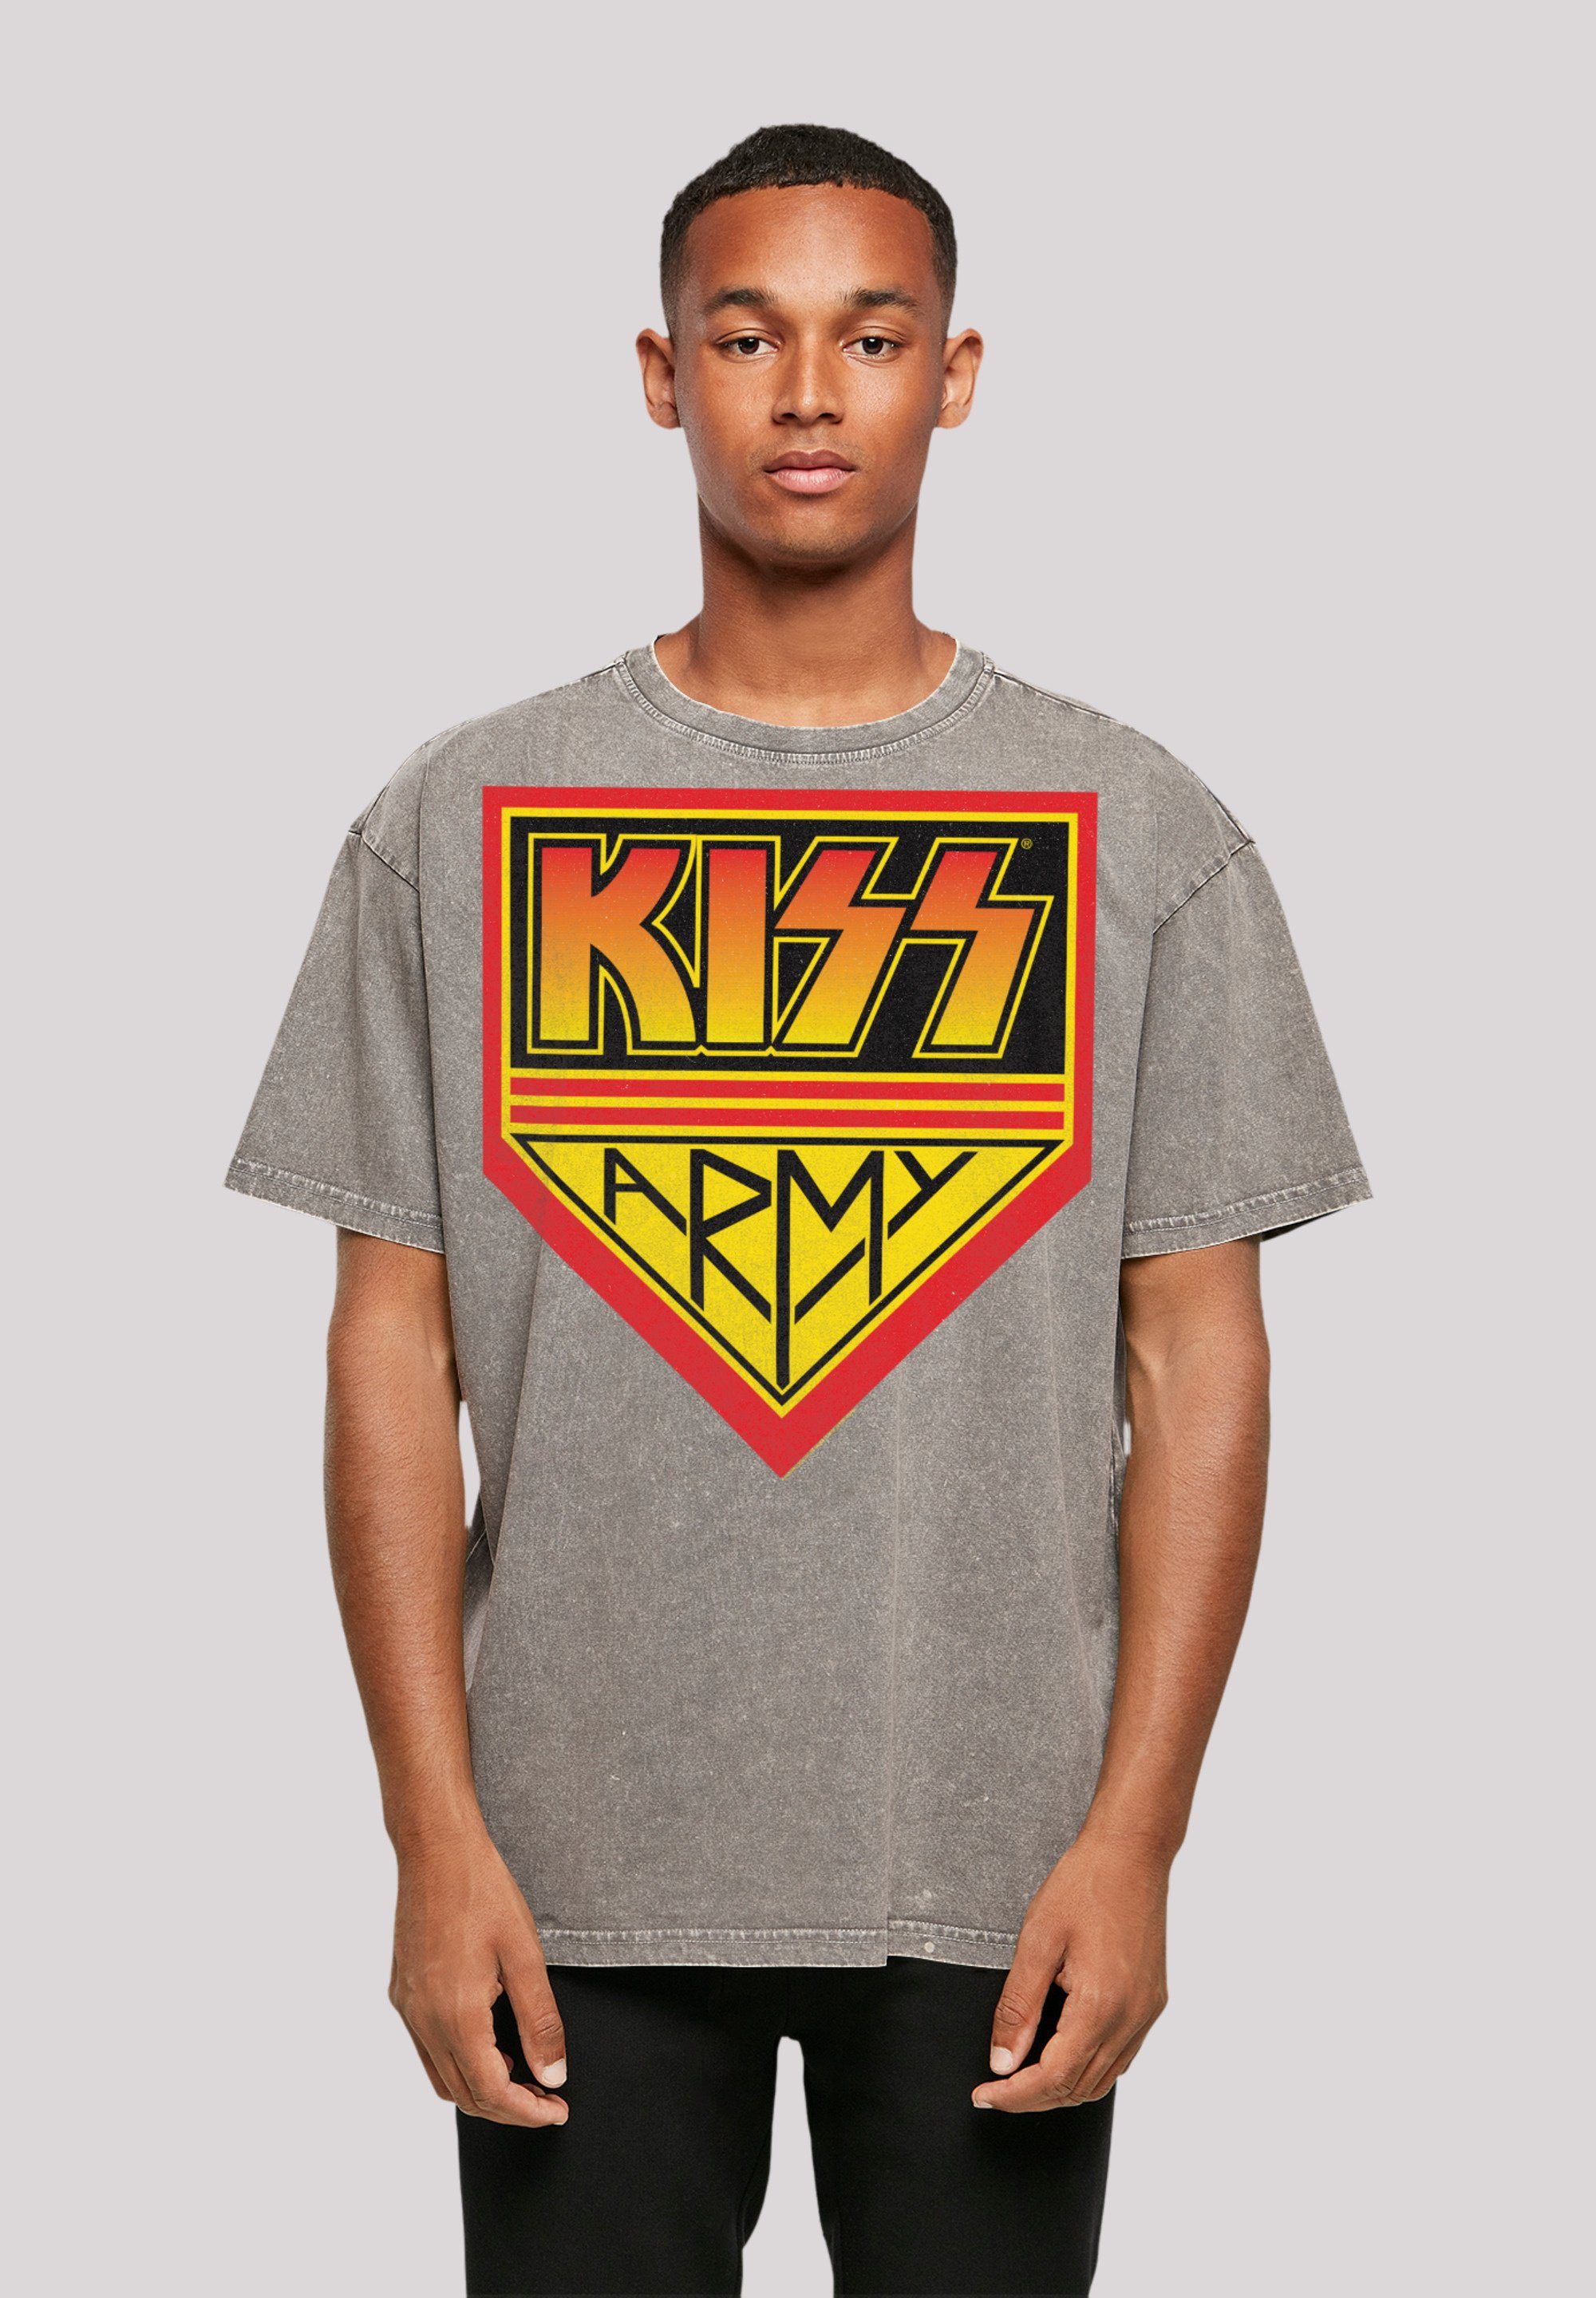 Army By Rock Logo Musik, Premium T-Shirt Off Asphalt Rock Kiss Qualität, Band F4NT4STIC